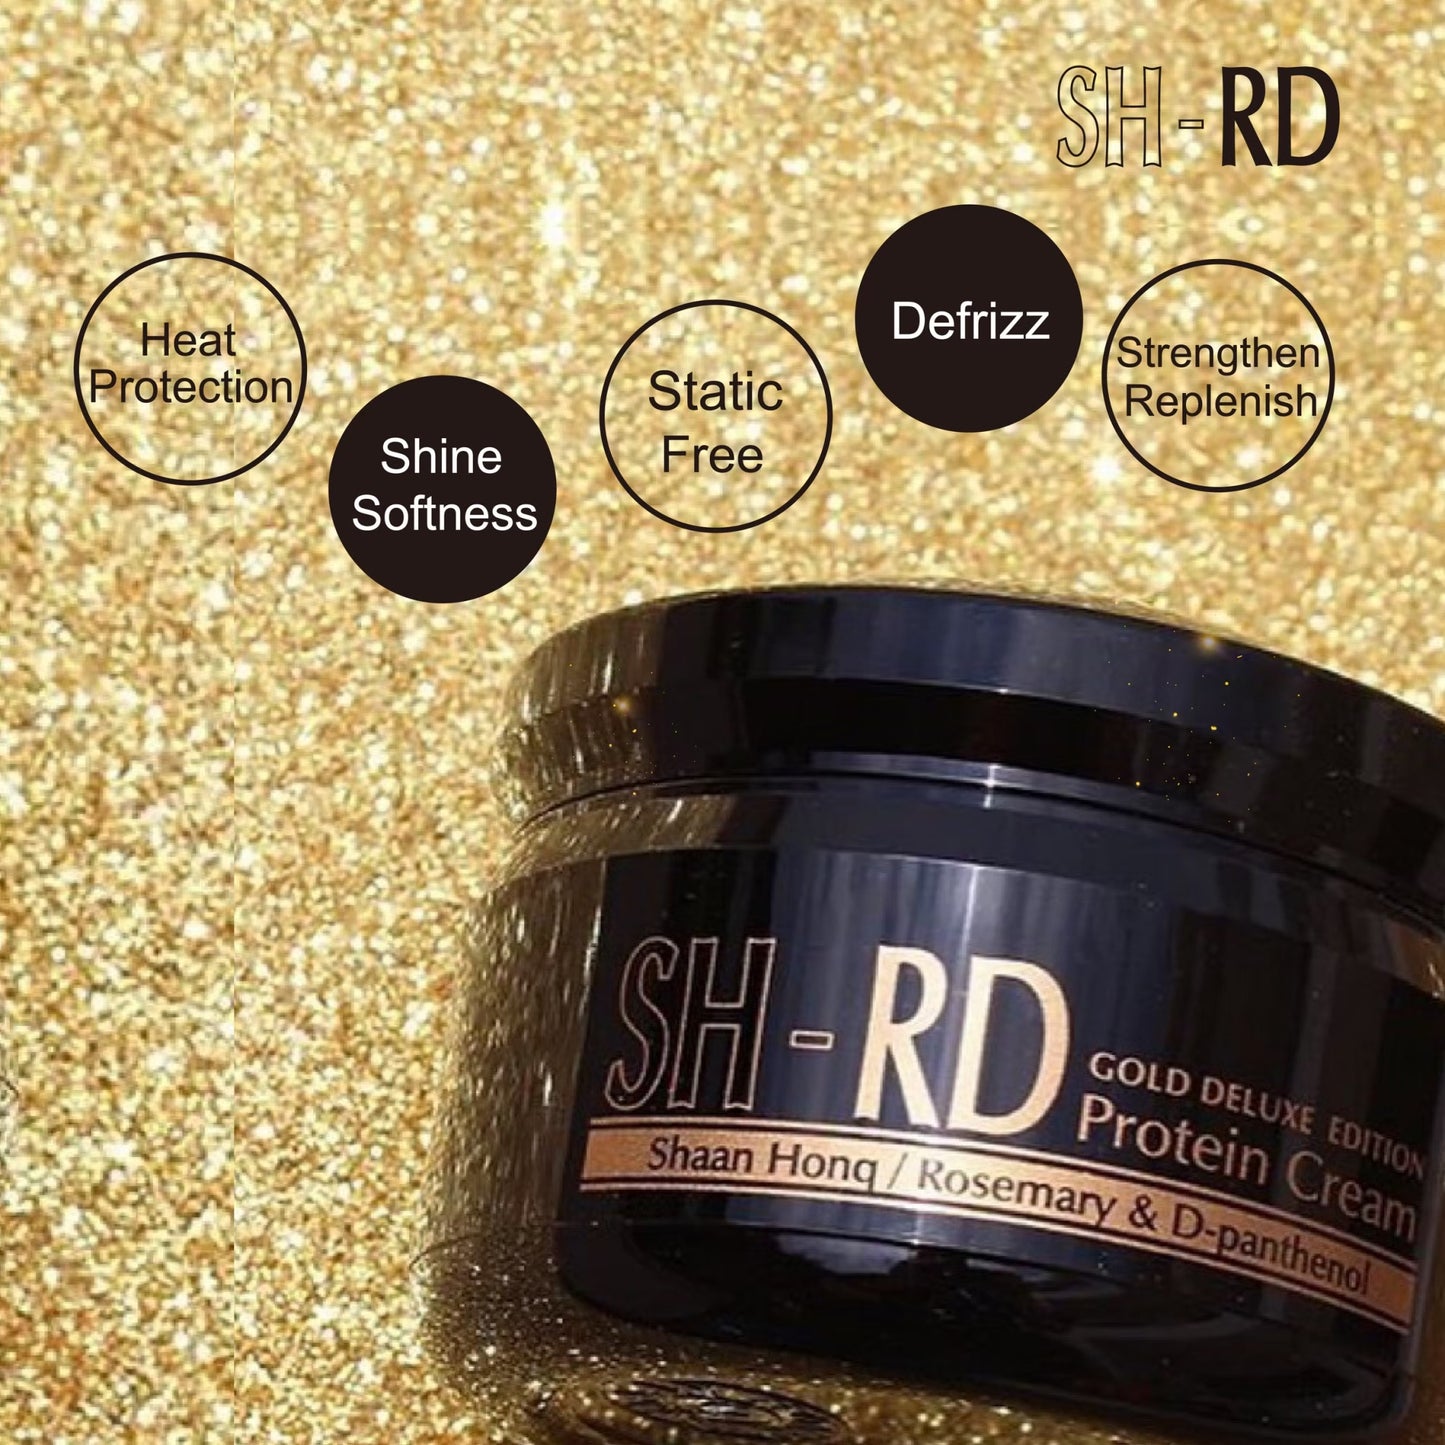 SH-RD Protein Cream Gold Deluxe Edition (2.71oz/80ml)